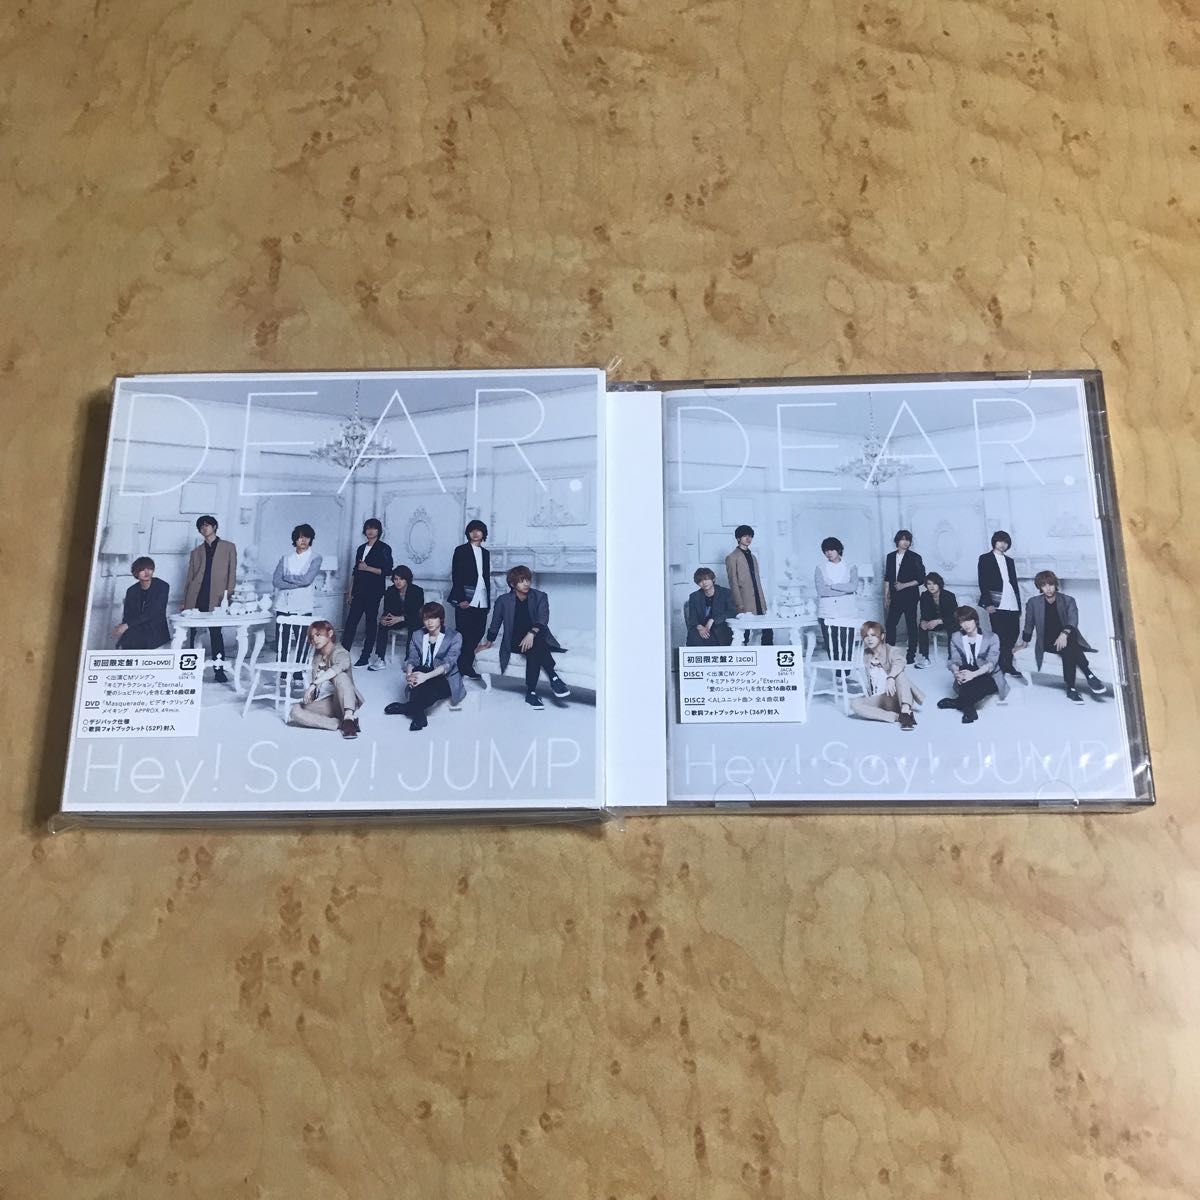 新品未開封 CD Hey! Say! JUMP DEAR. 初回限定盤1 CD+DVD 初回限定盤2 2CD セット アルバム  